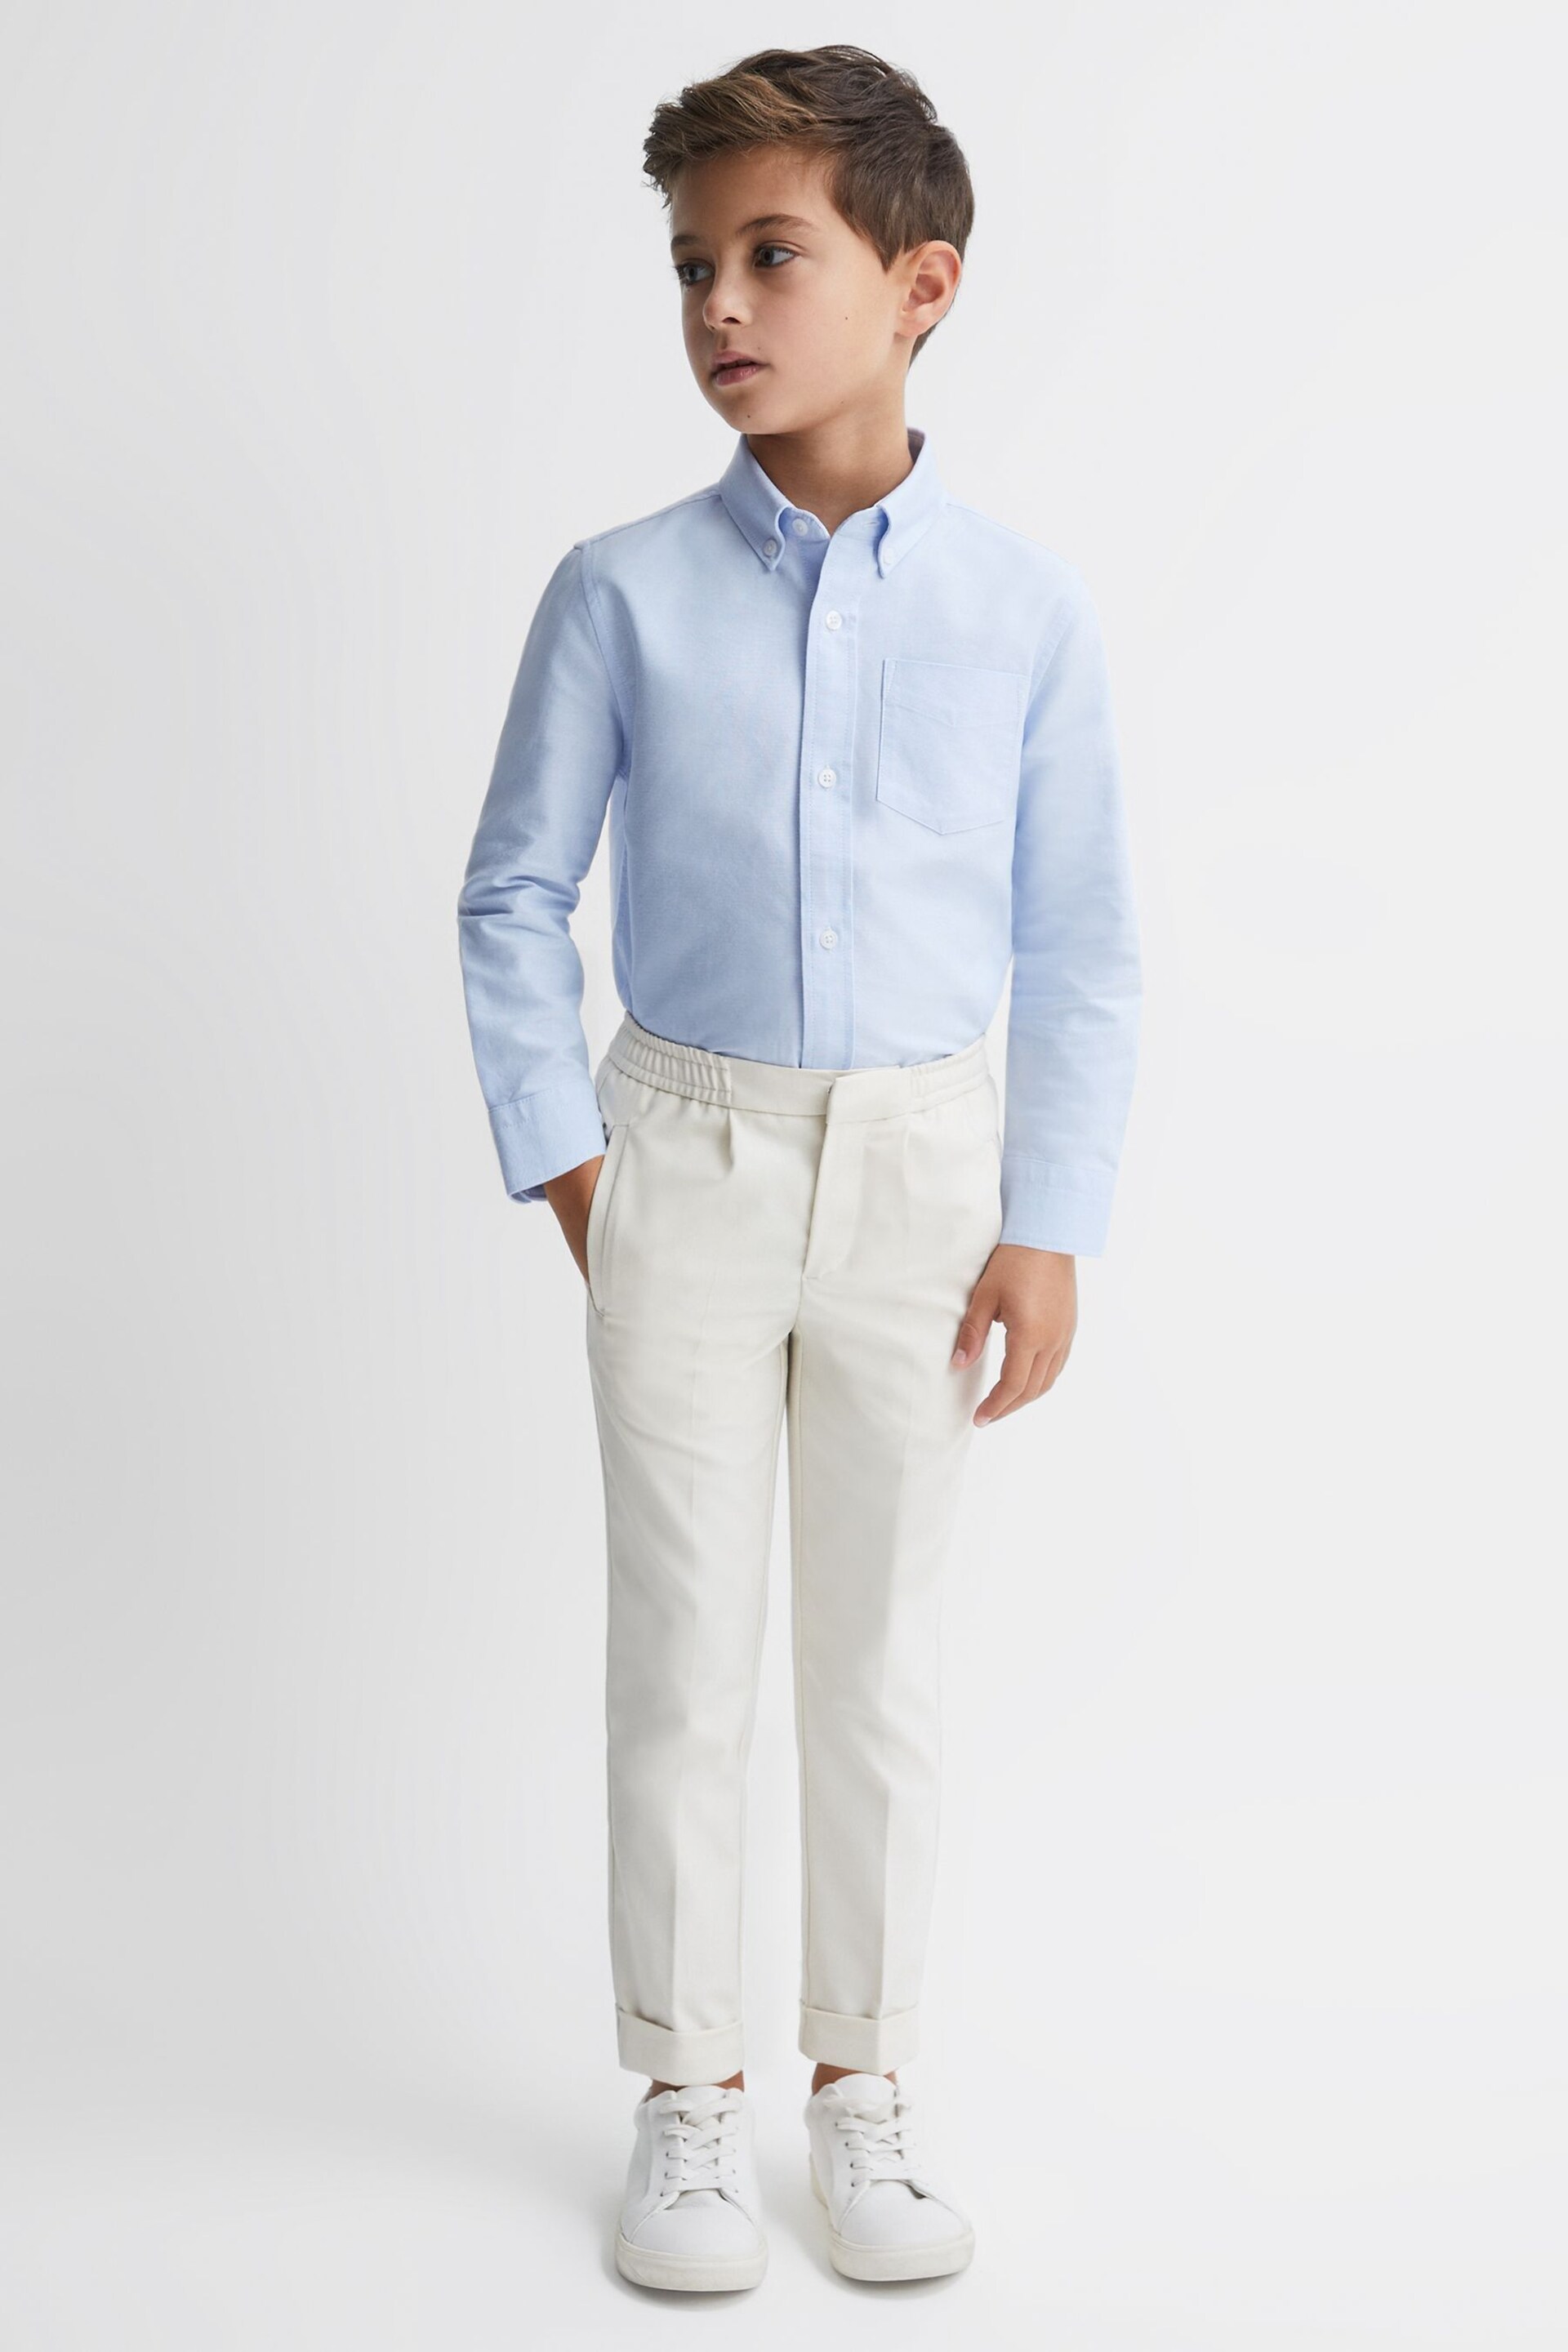 Reiss Soft Blue Greenwich Senior Slim Fit Button-Down Oxford Shirt - Image 1 of 6